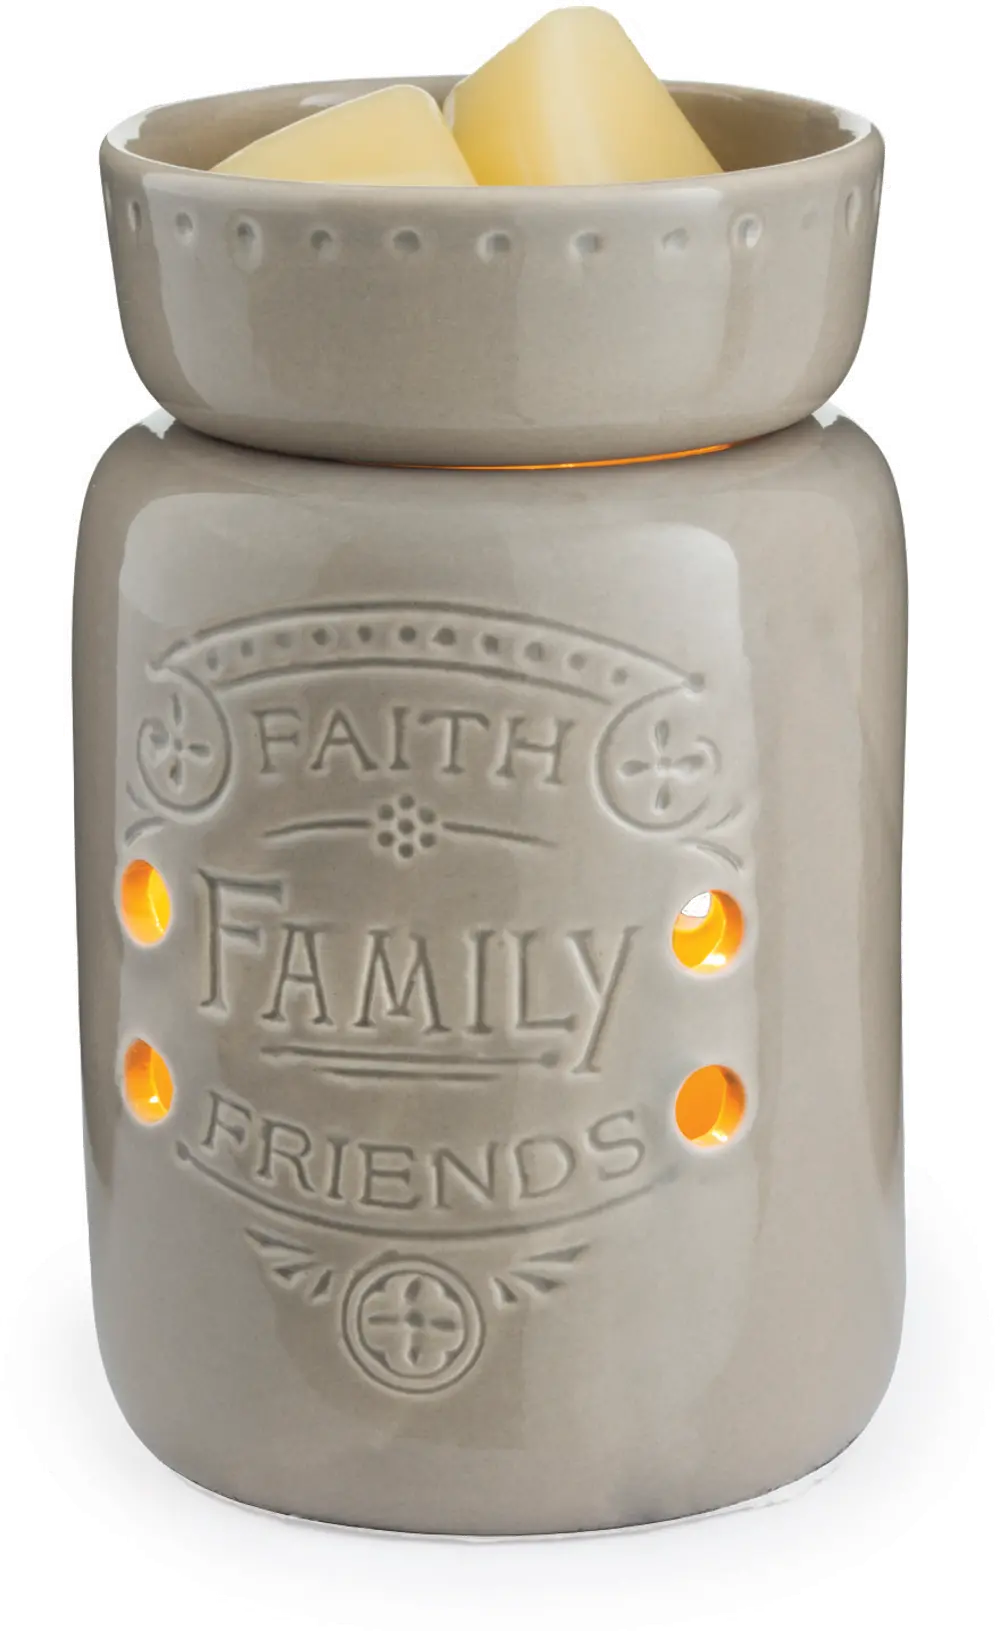 Faith Family Friends Mid-Size Illumination Fragrance Warmer - Candle Warmers-1